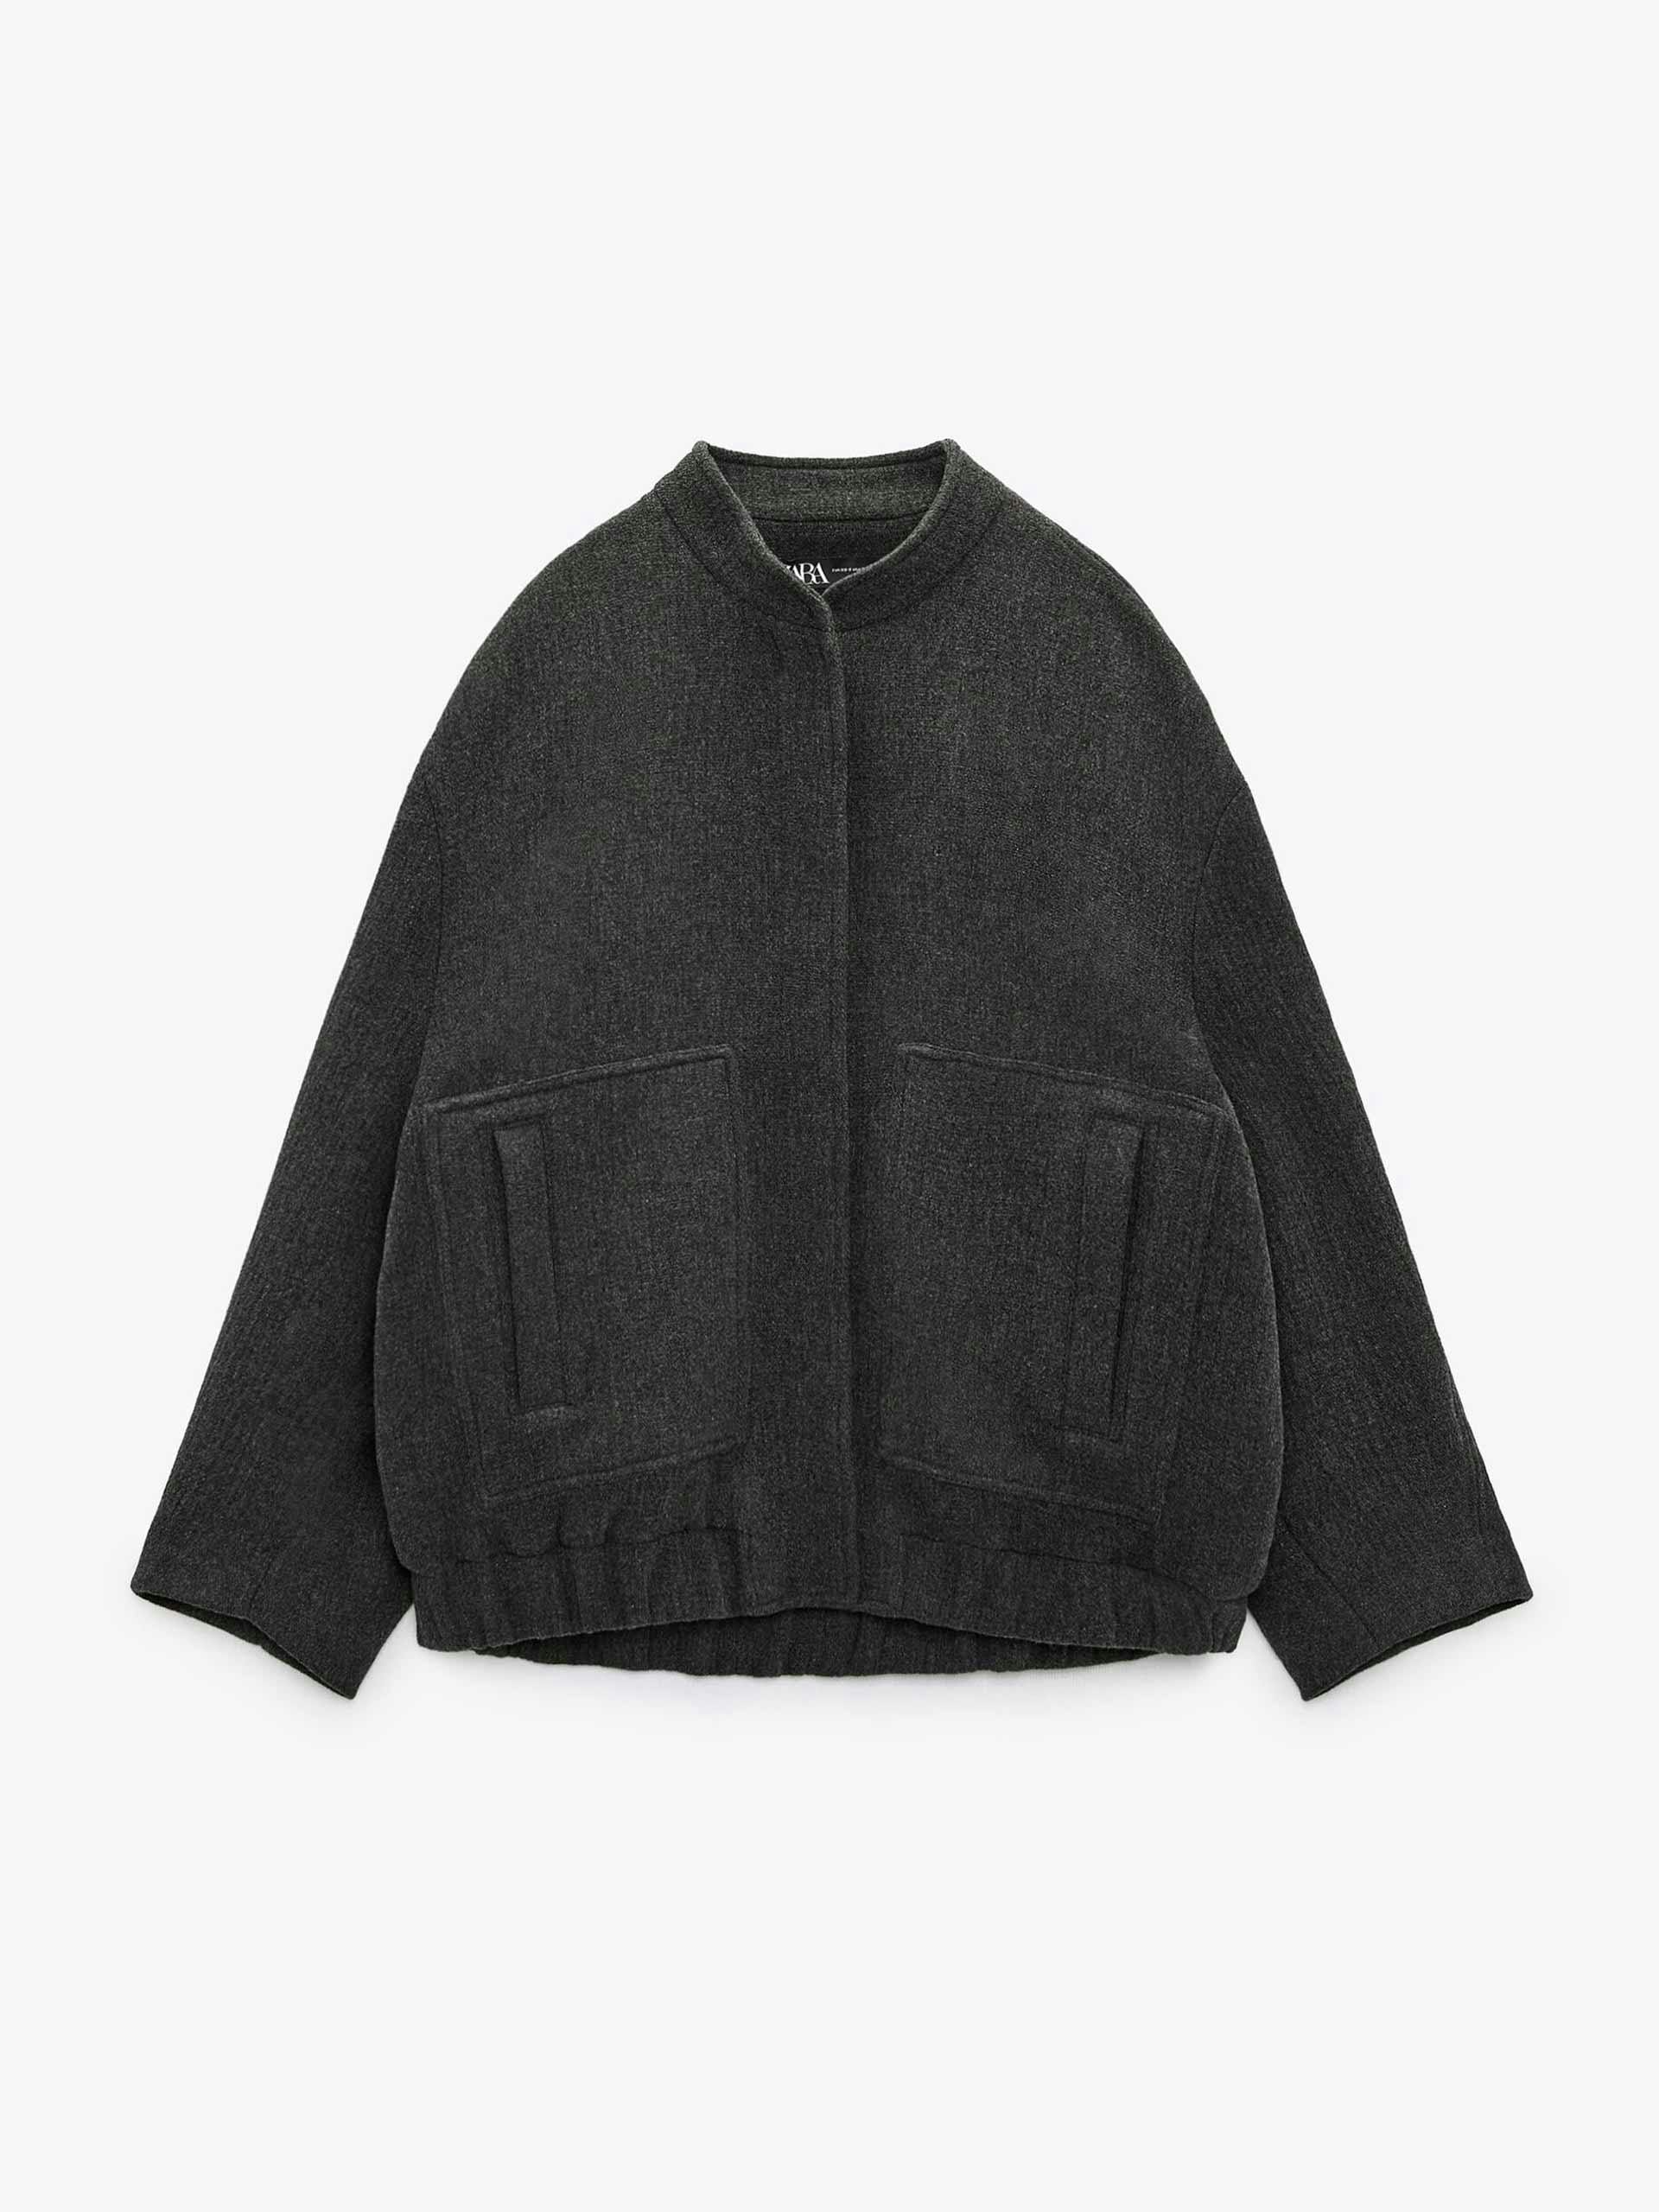 Black wool bomber jacket